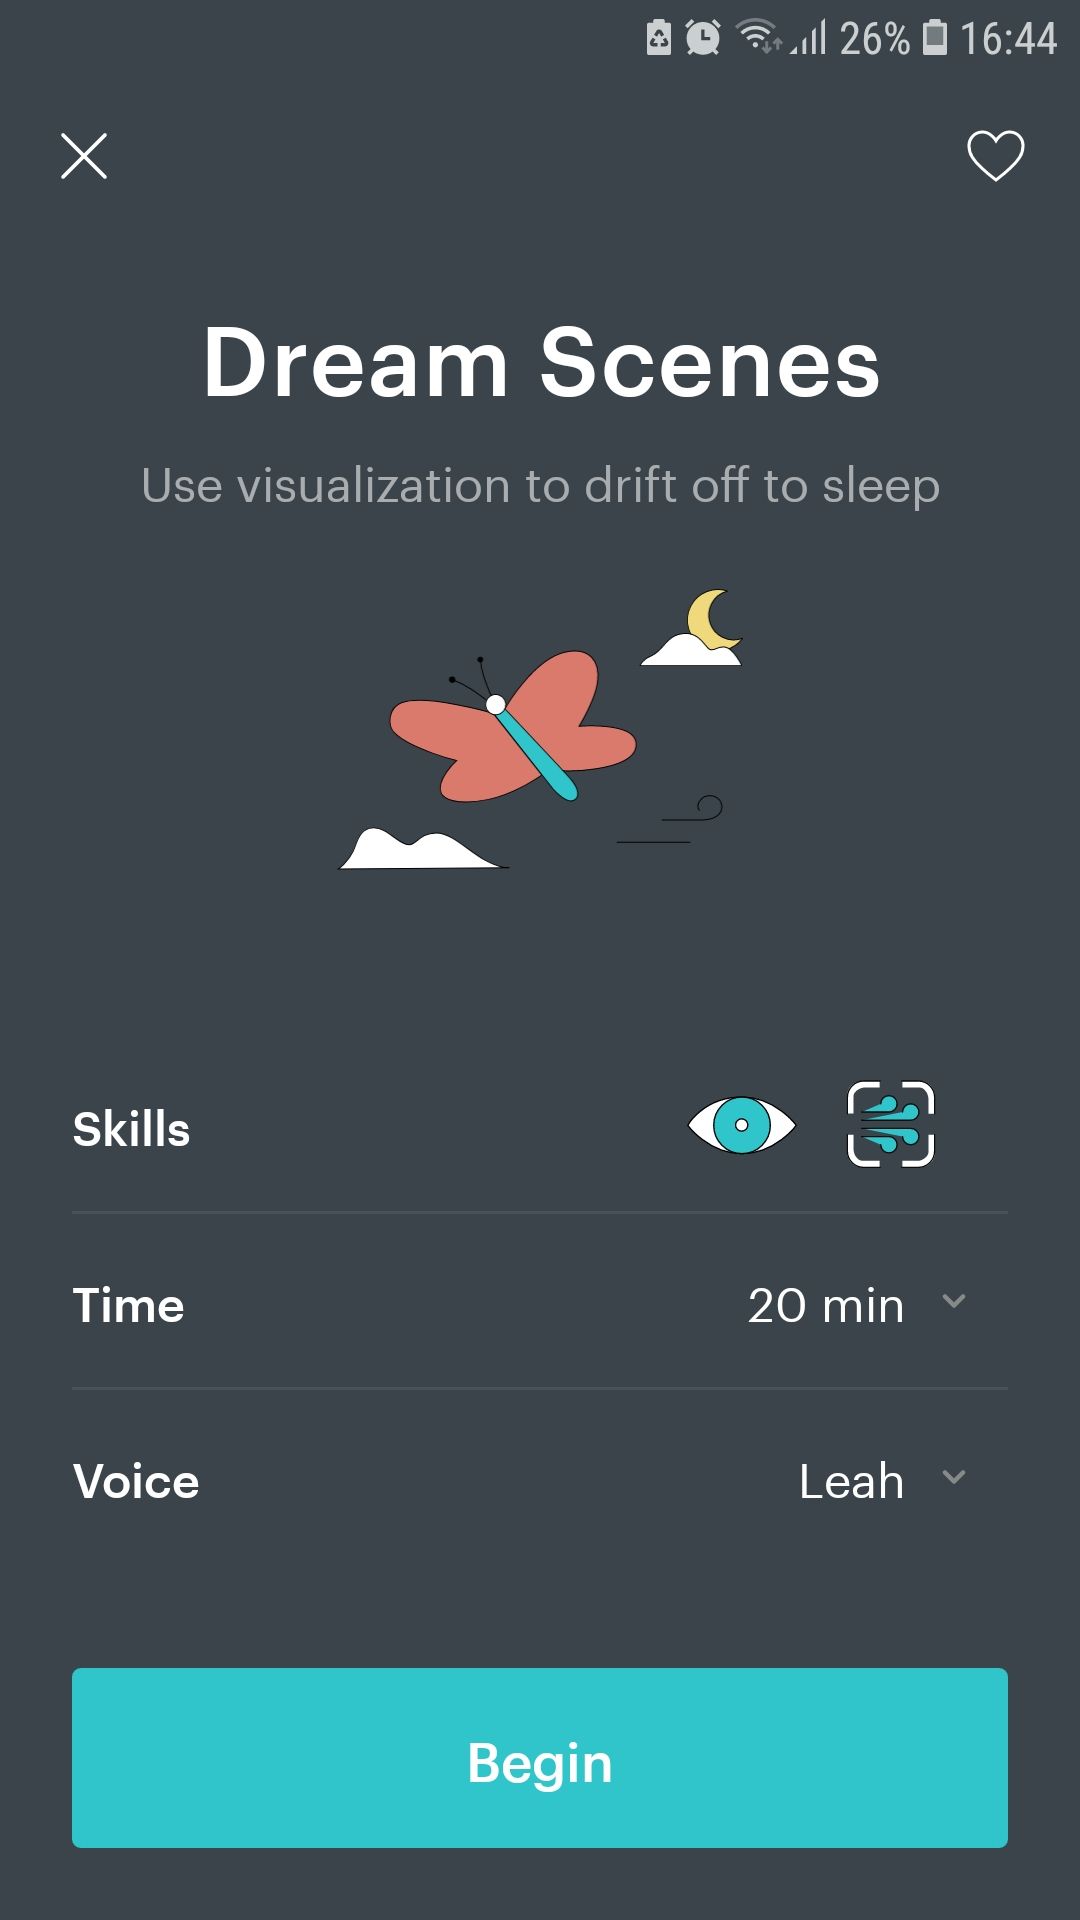 Balance mobile meditation app dream